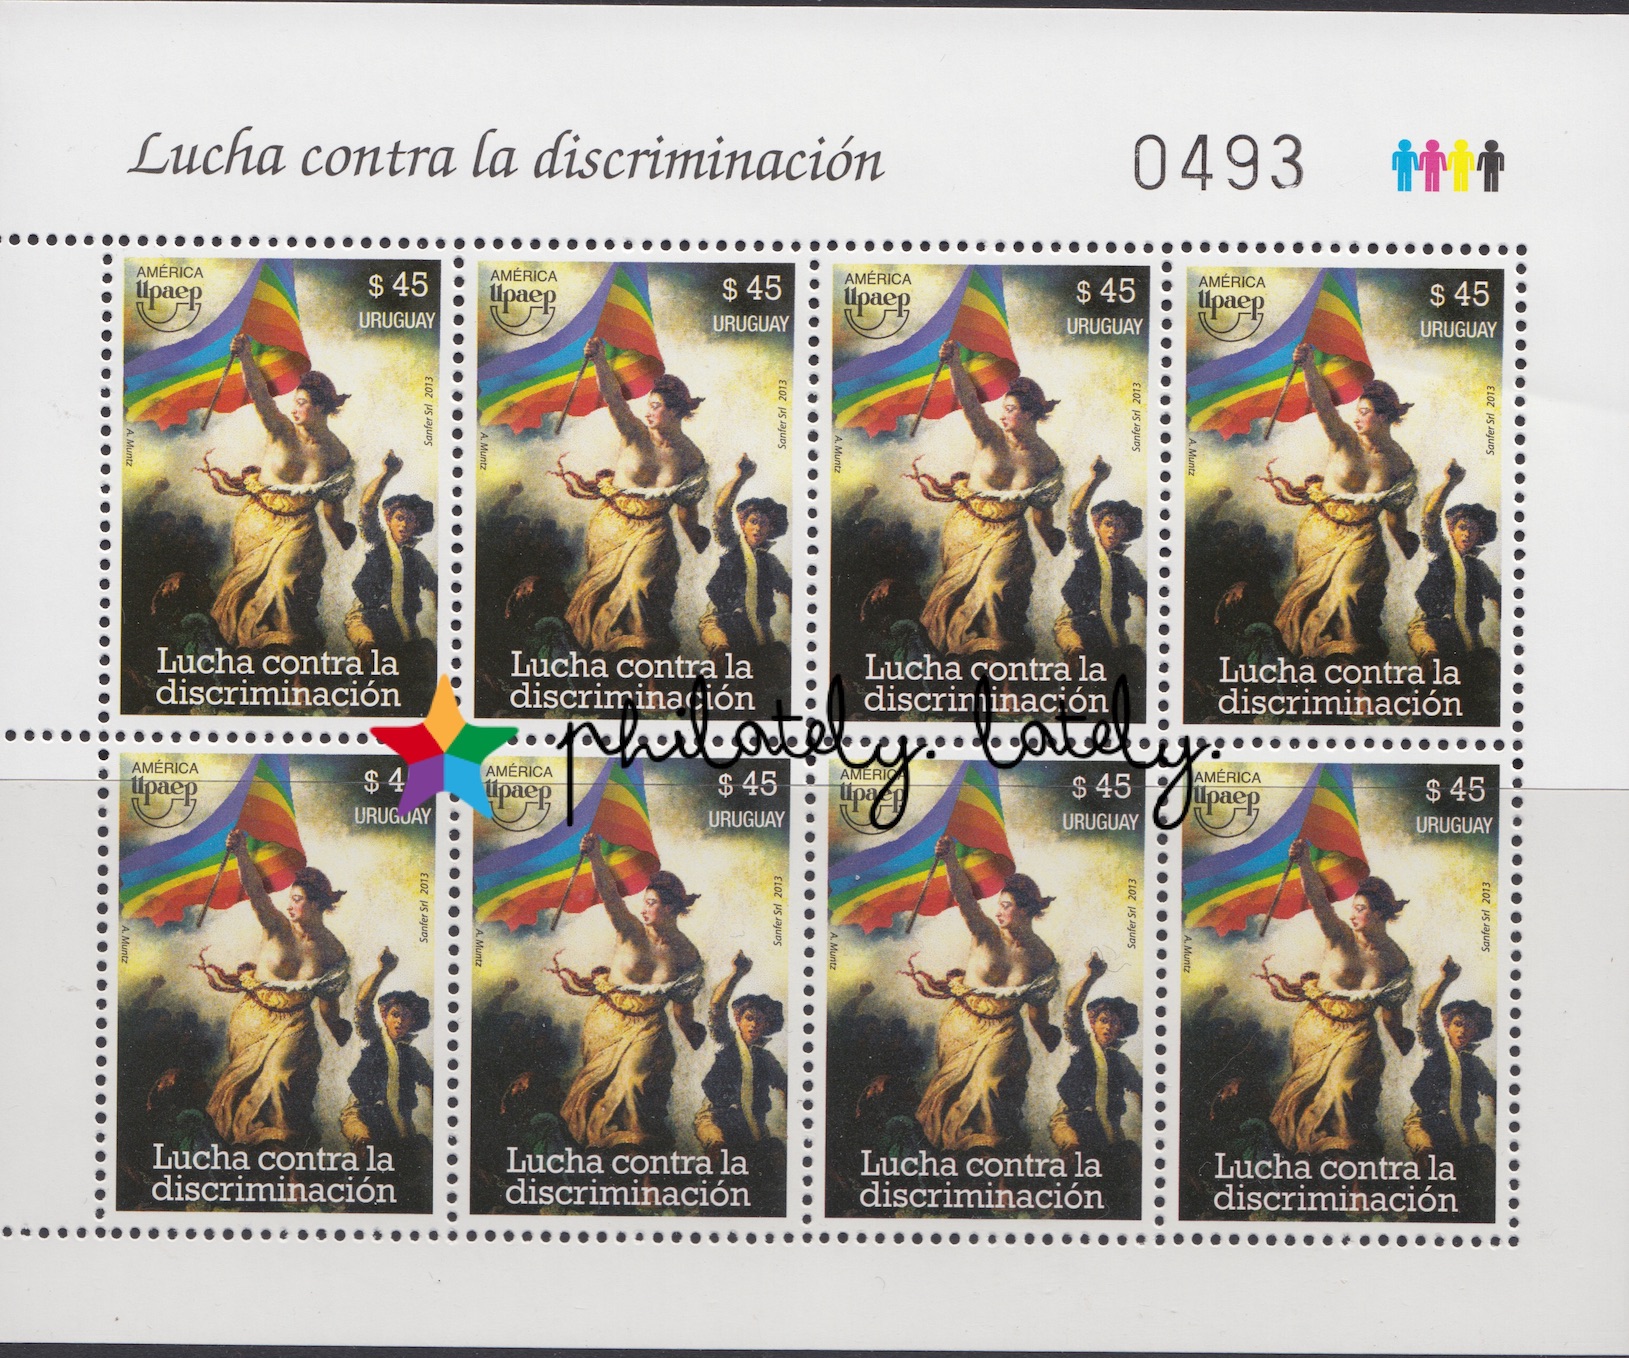 002_Uruguay_LGBT_Stamps